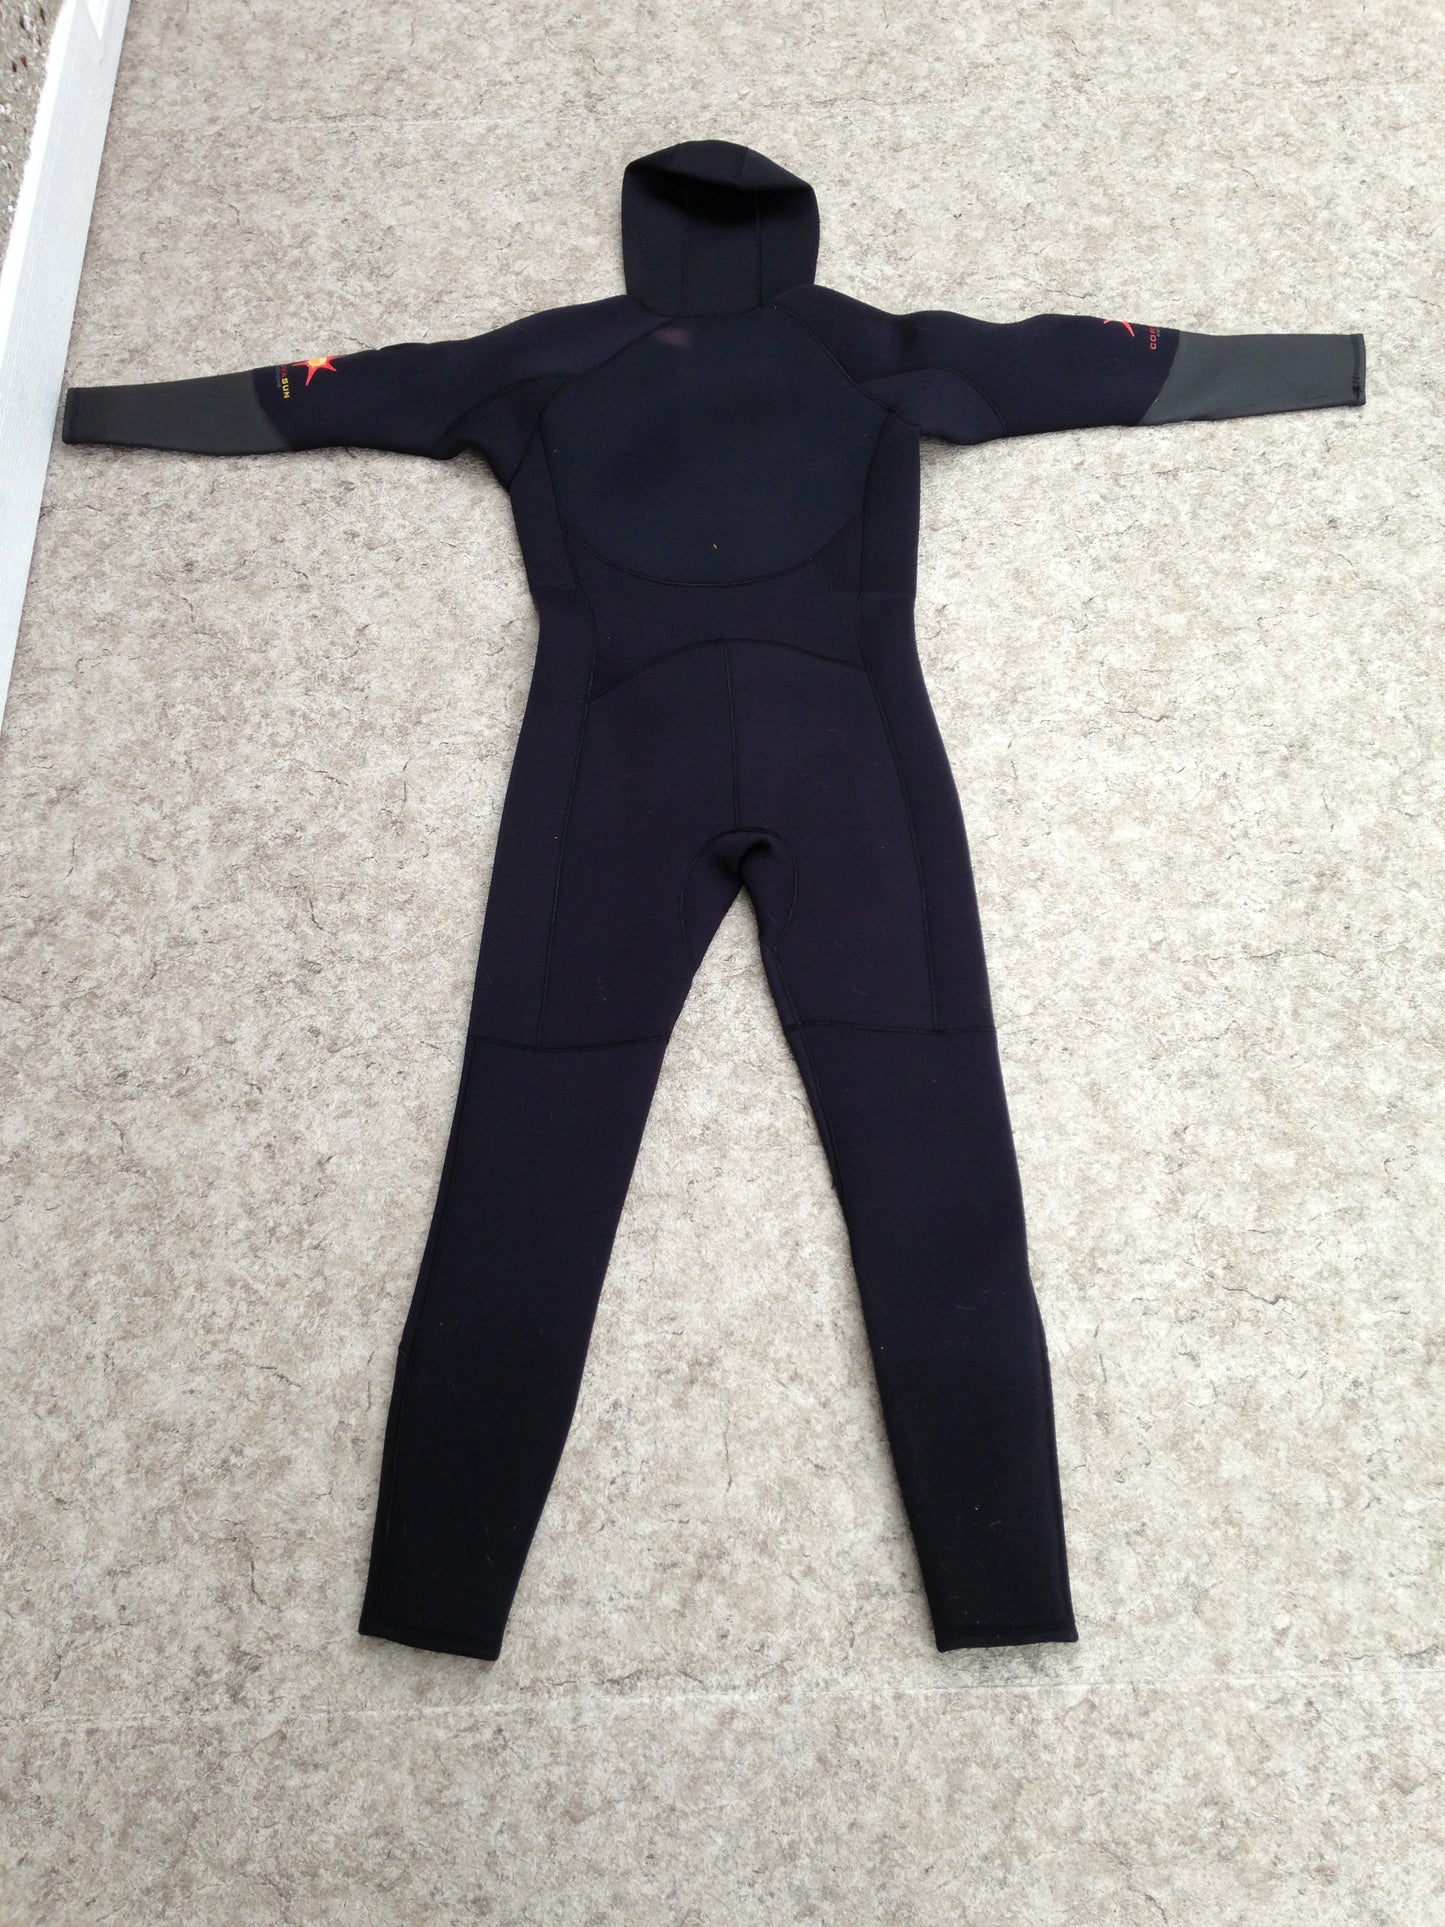 Wetsuit Men's Size Large Full Cordova Sun Surf Dive Neoprene 4-5 mm Black Minor Wear